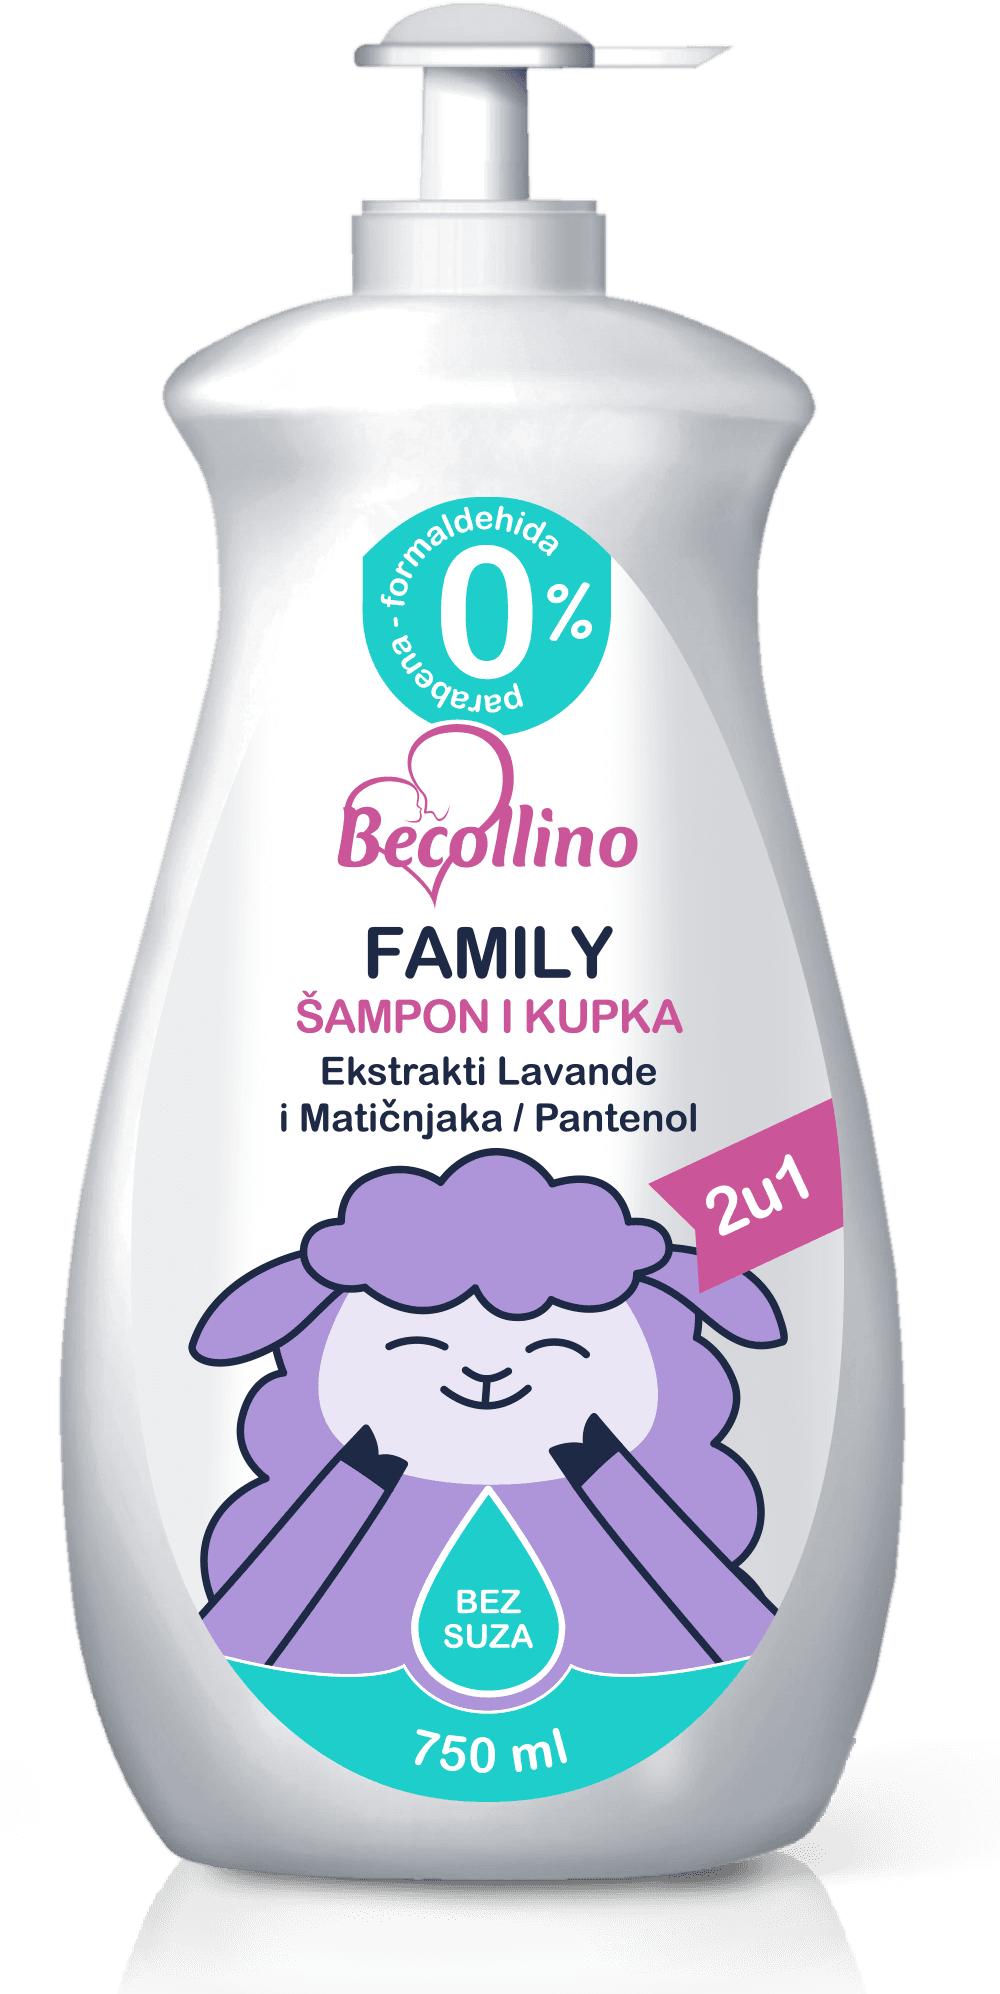 BECOLLINO Family šampon i kupka 2u1 750ml